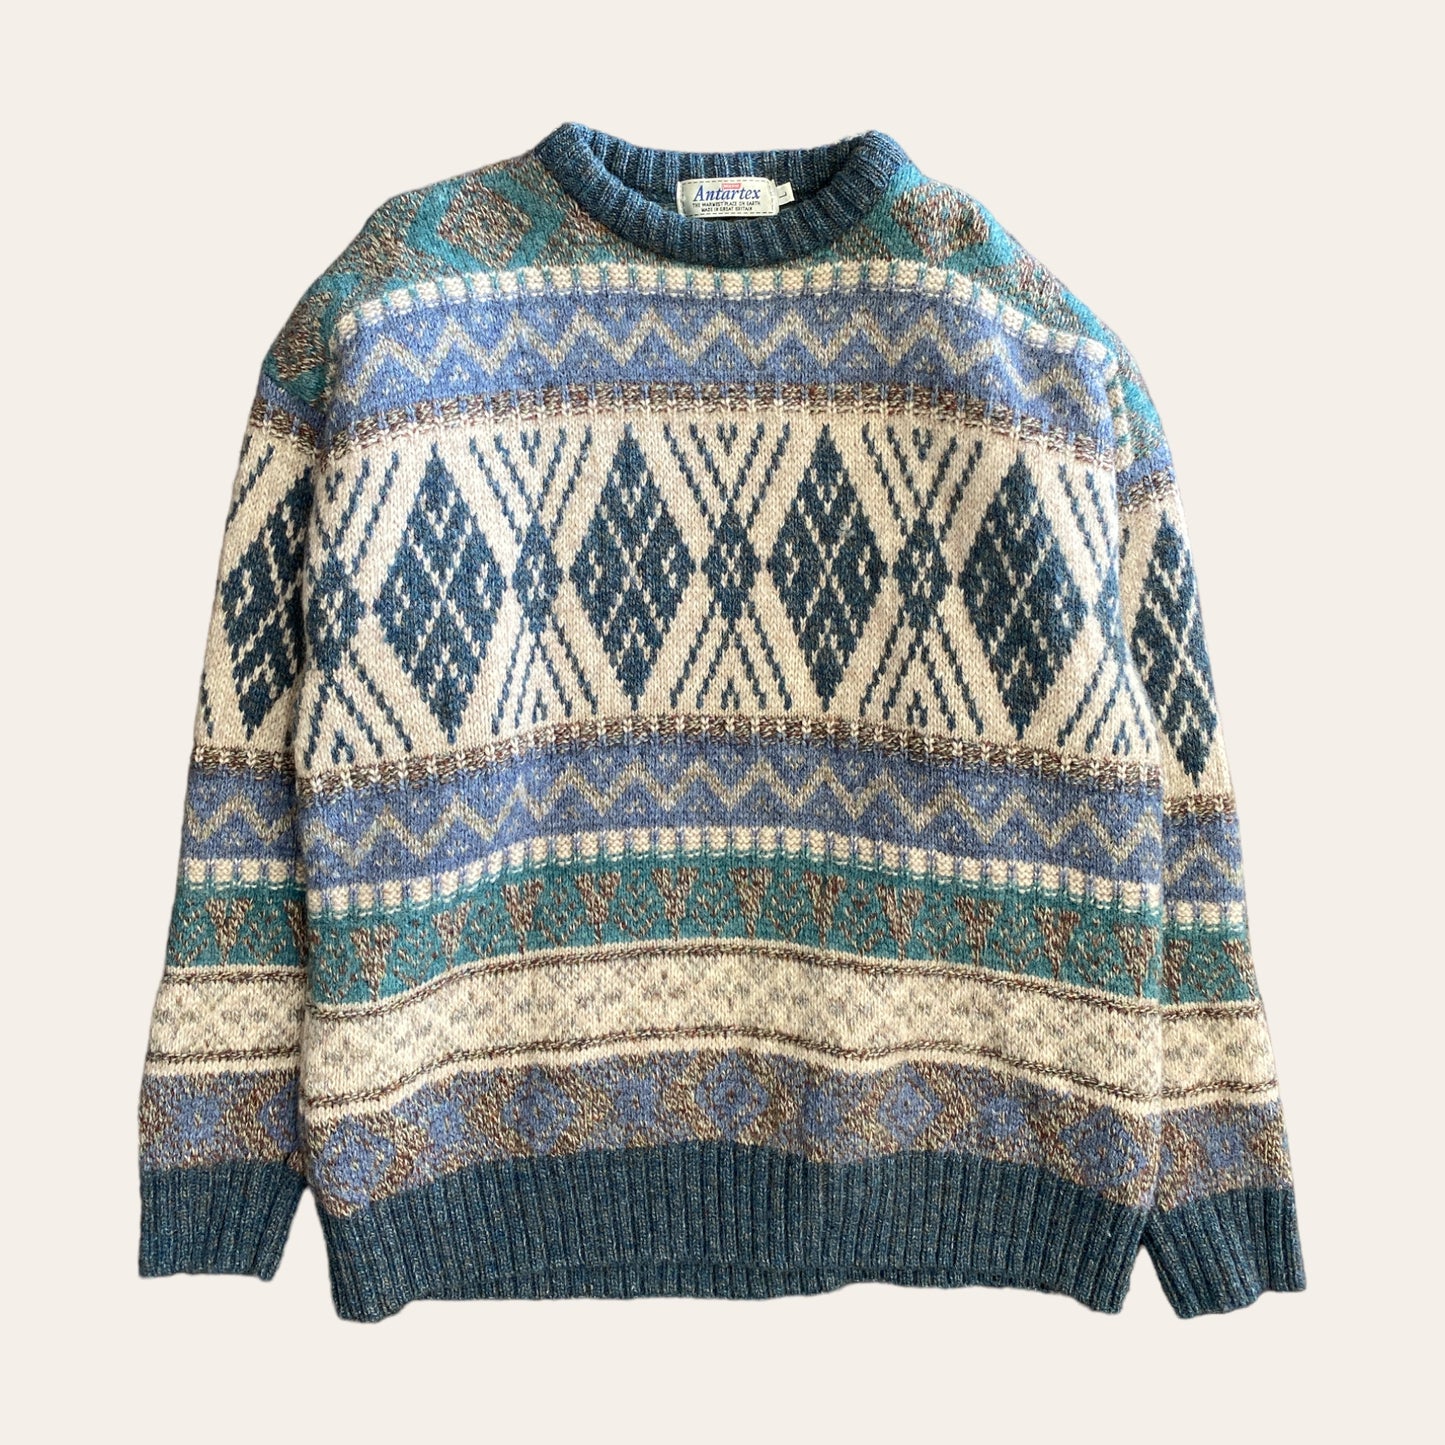 90's Antartex Wool Knit Sweater Size L